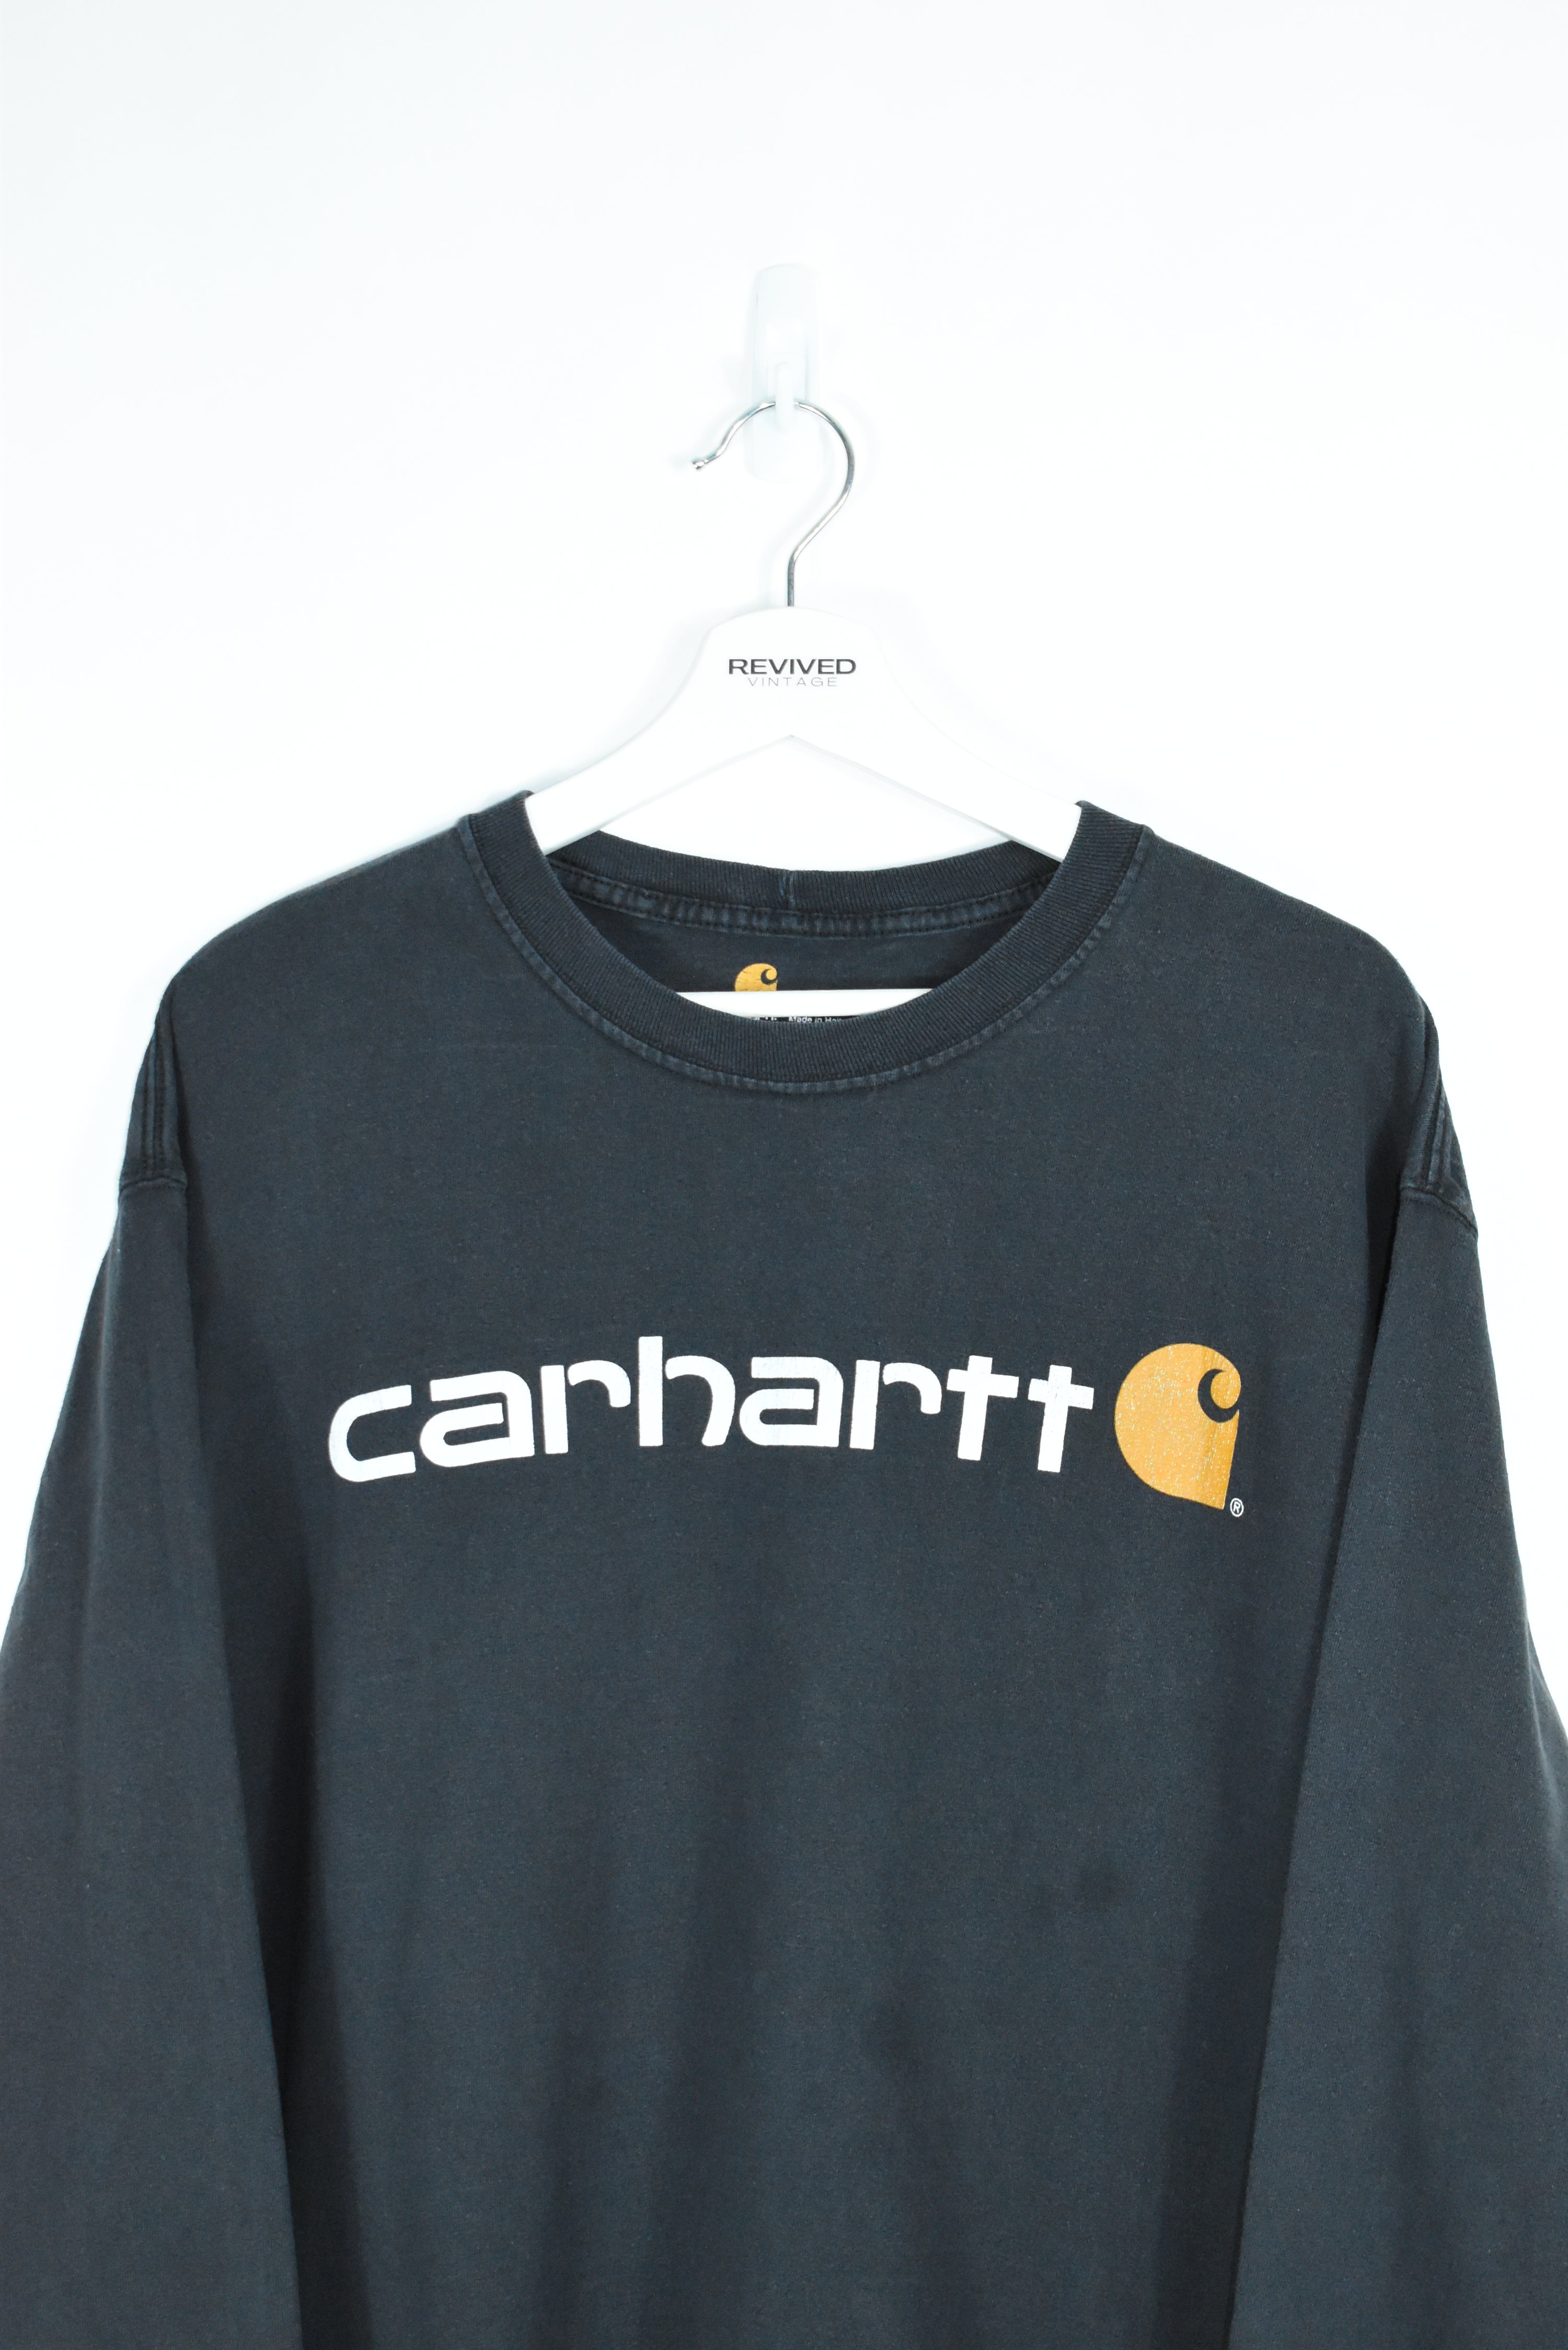 Vintage Carhartt Long Sleeve Shirt Xlarge